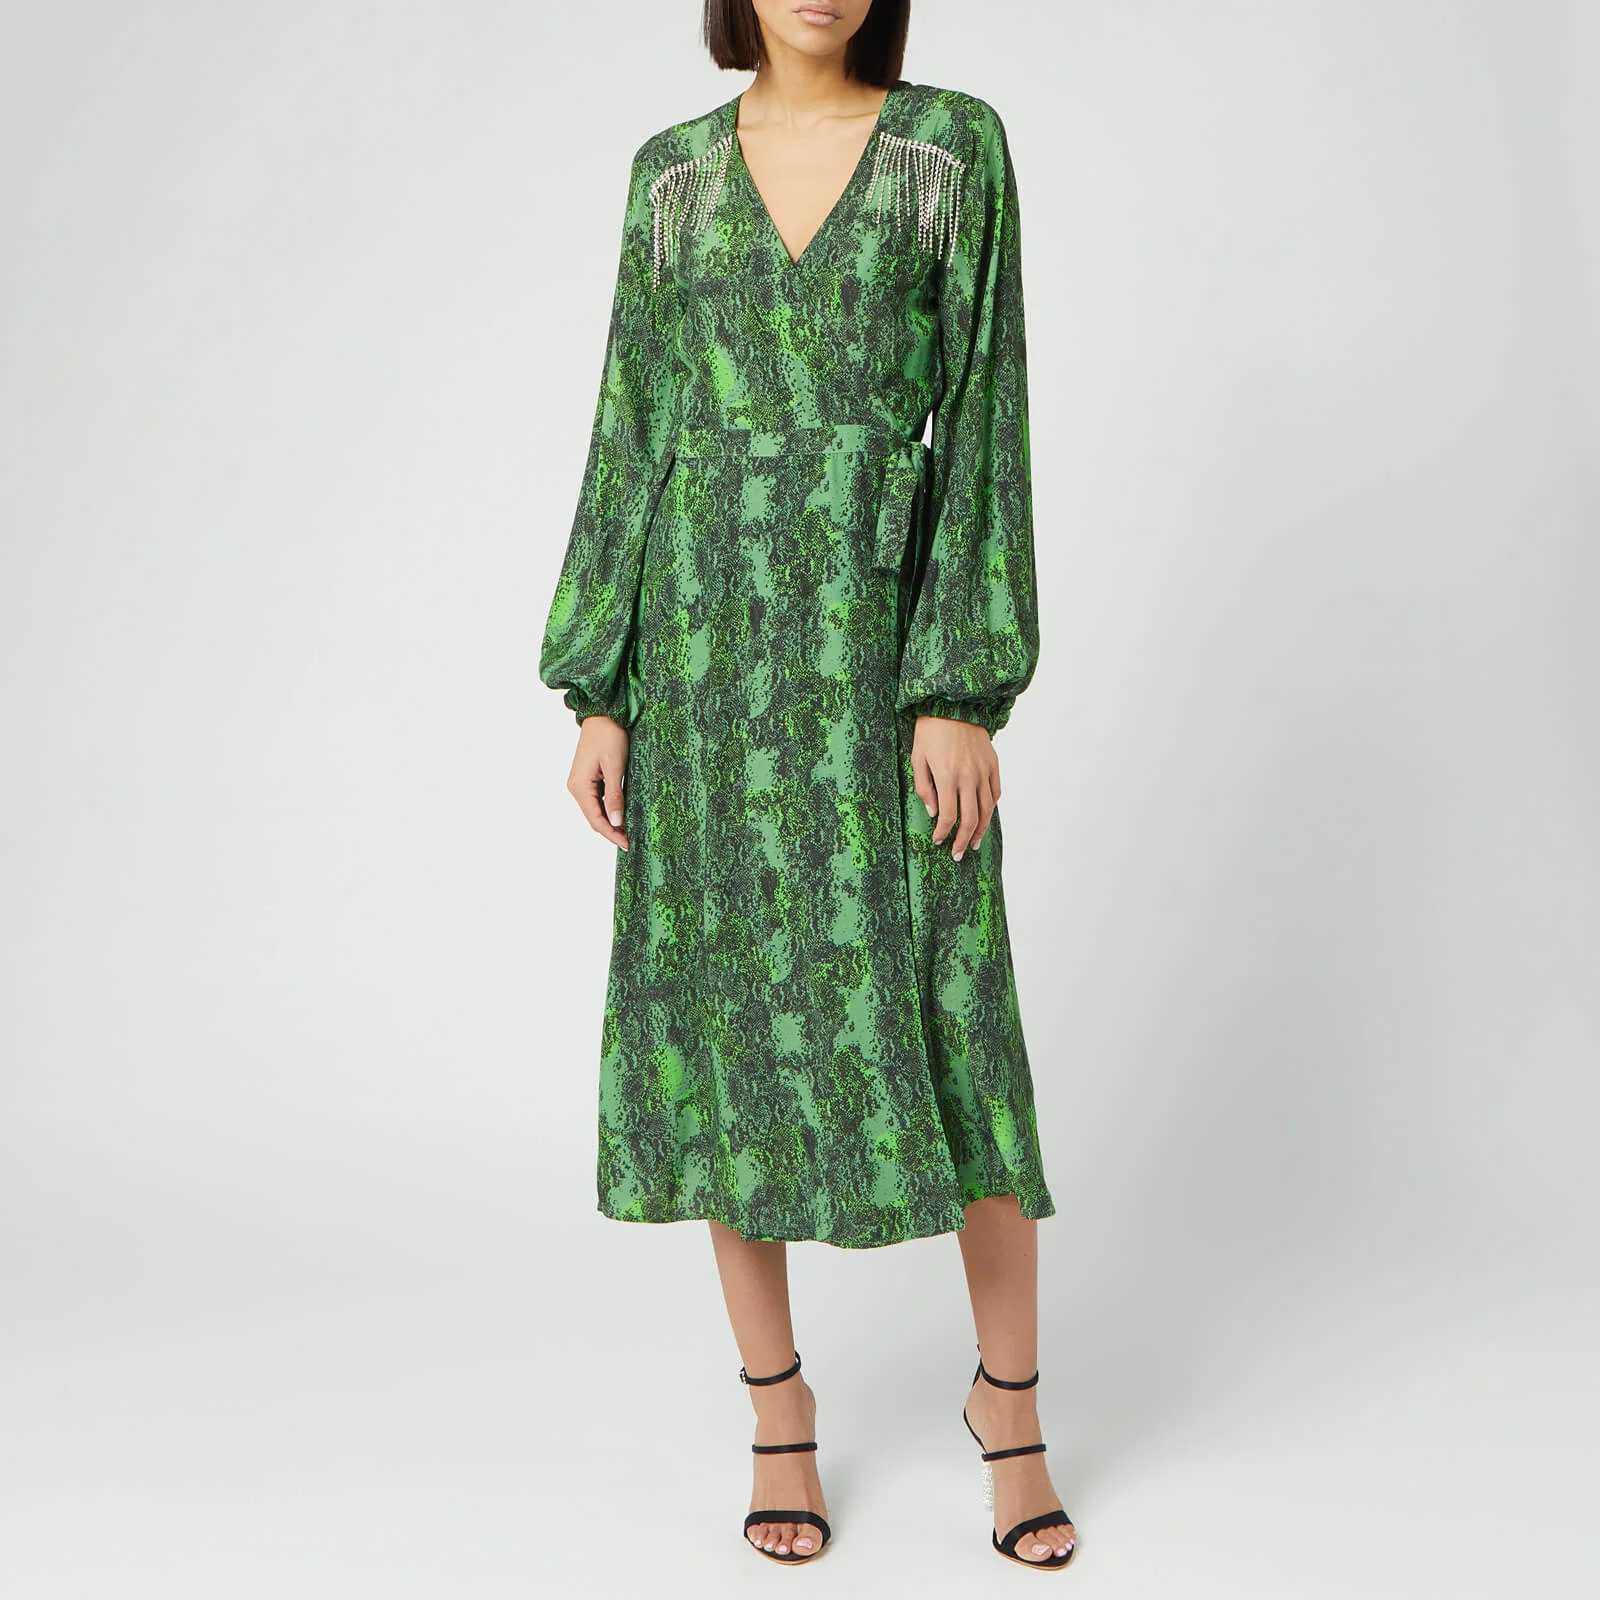 ROTATE Birger Christensen Women's Kira Midi Dress - Stone Green Image 1